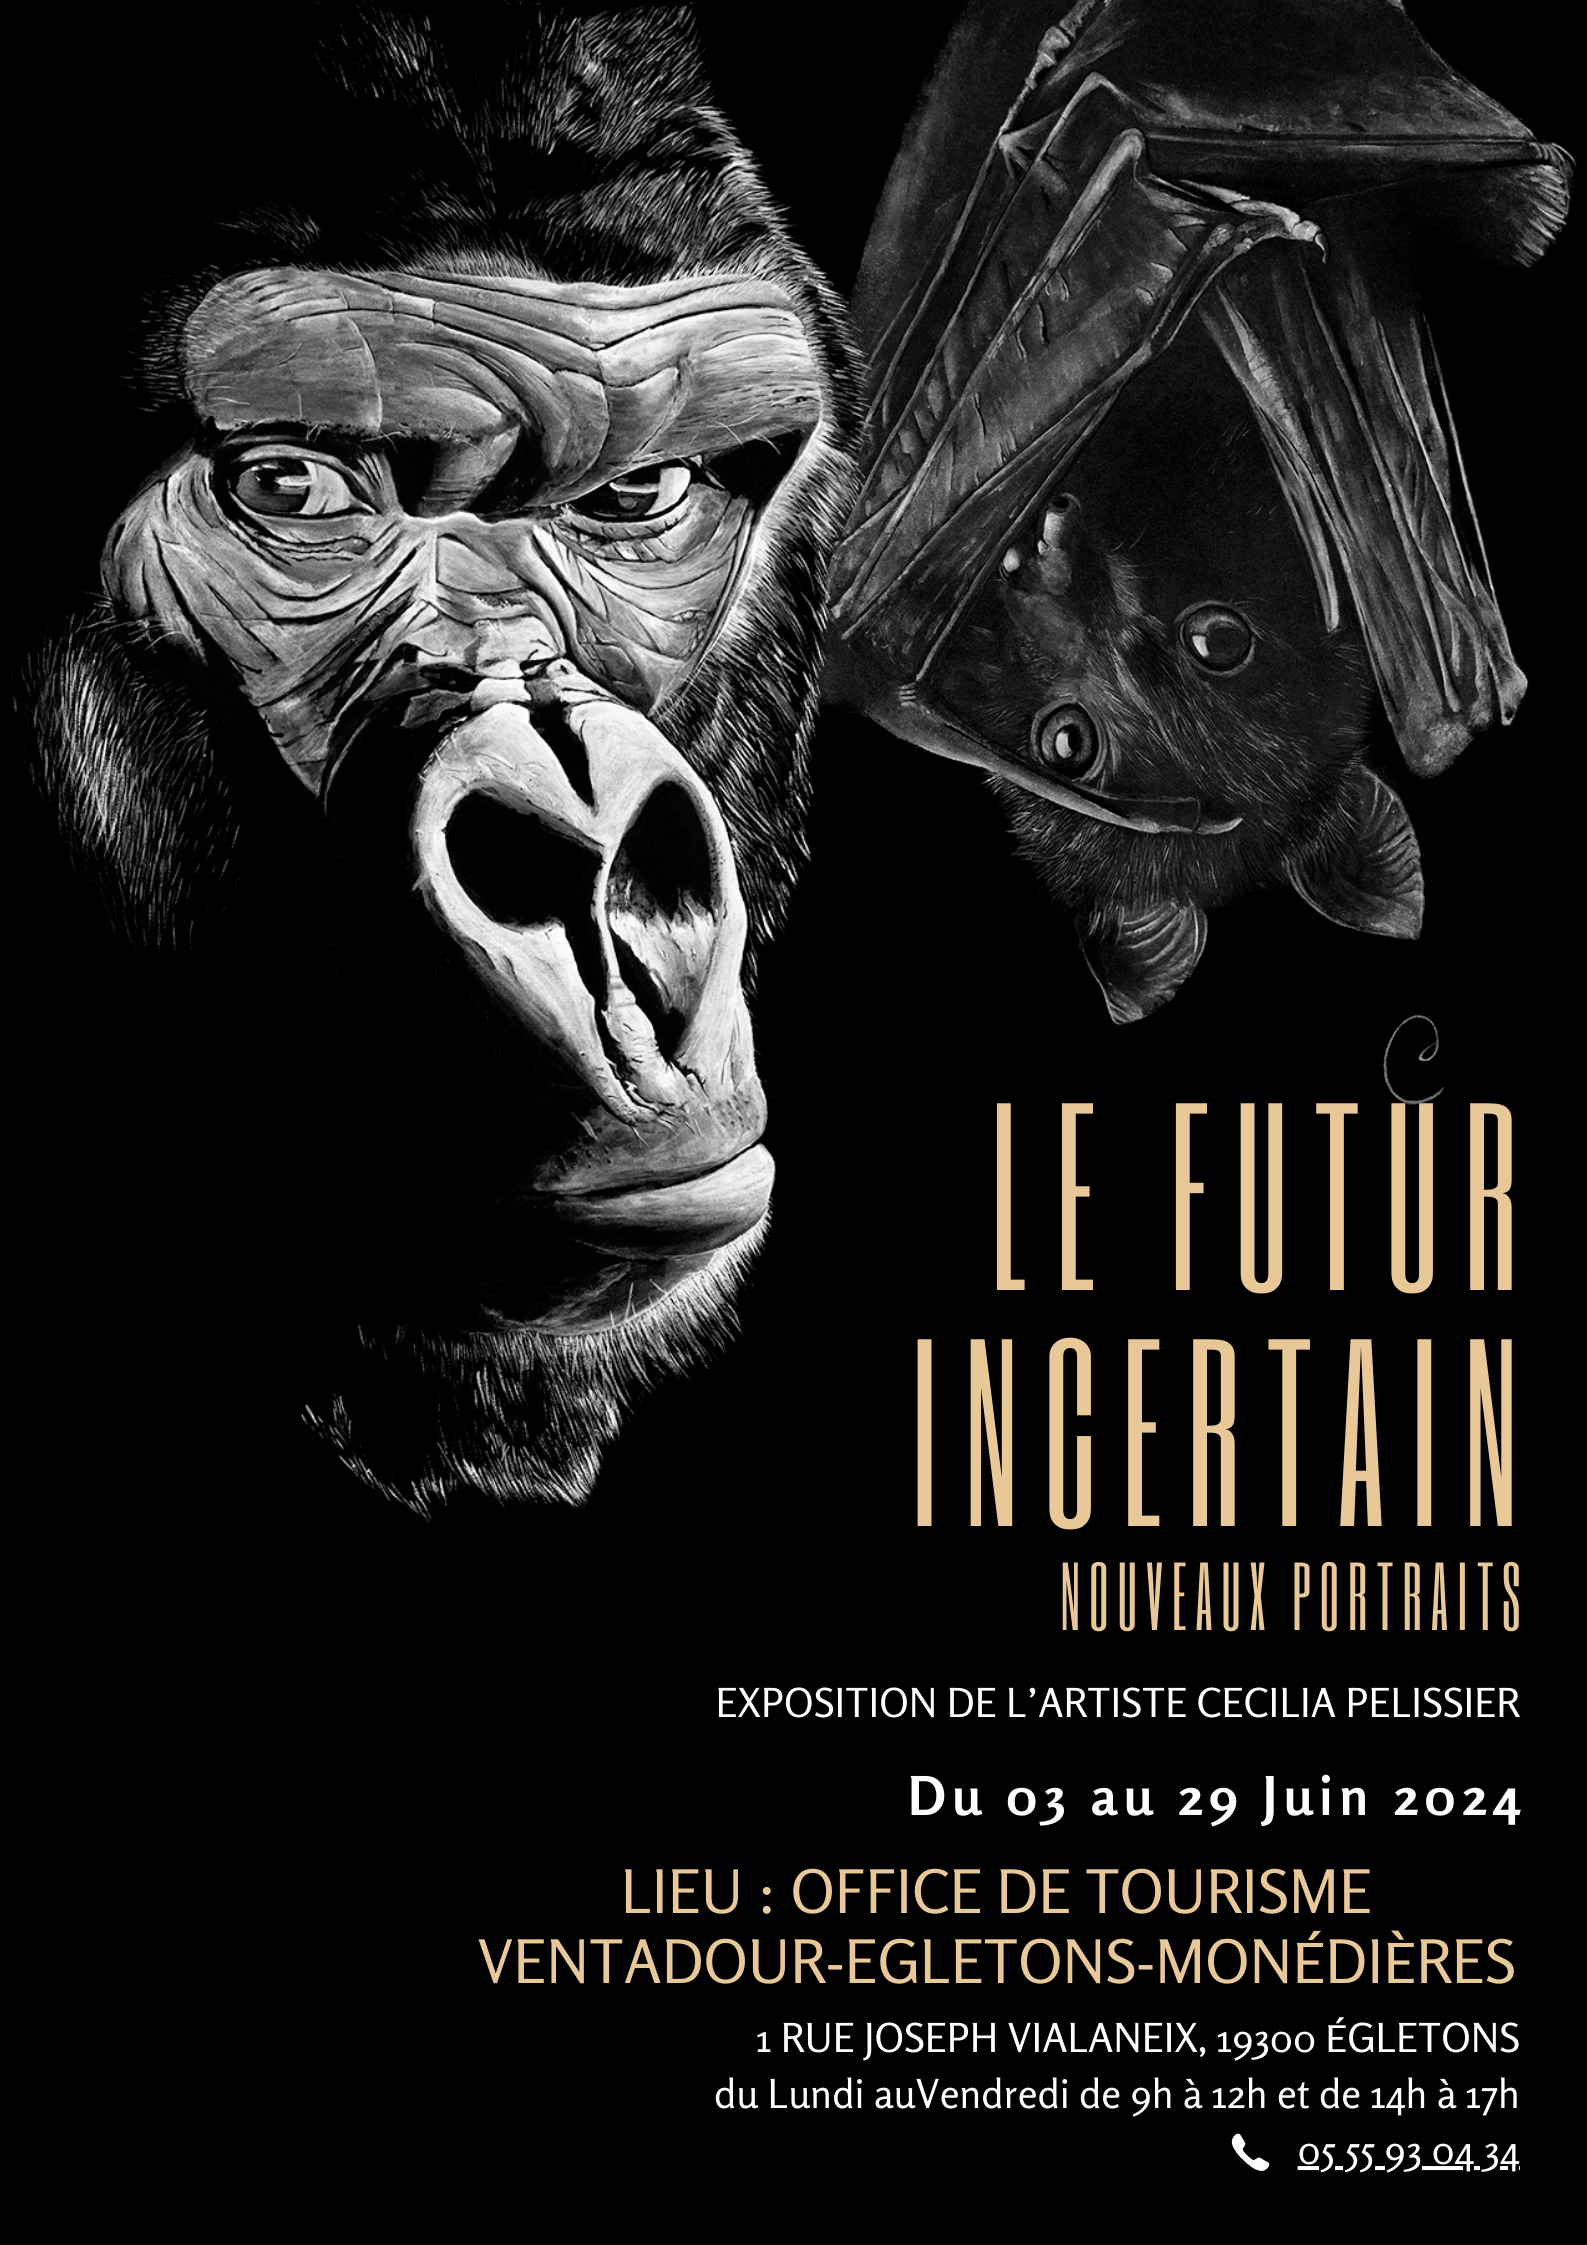 Exposition Cécilia Pélissier "Le futur incertain" null France null null null null